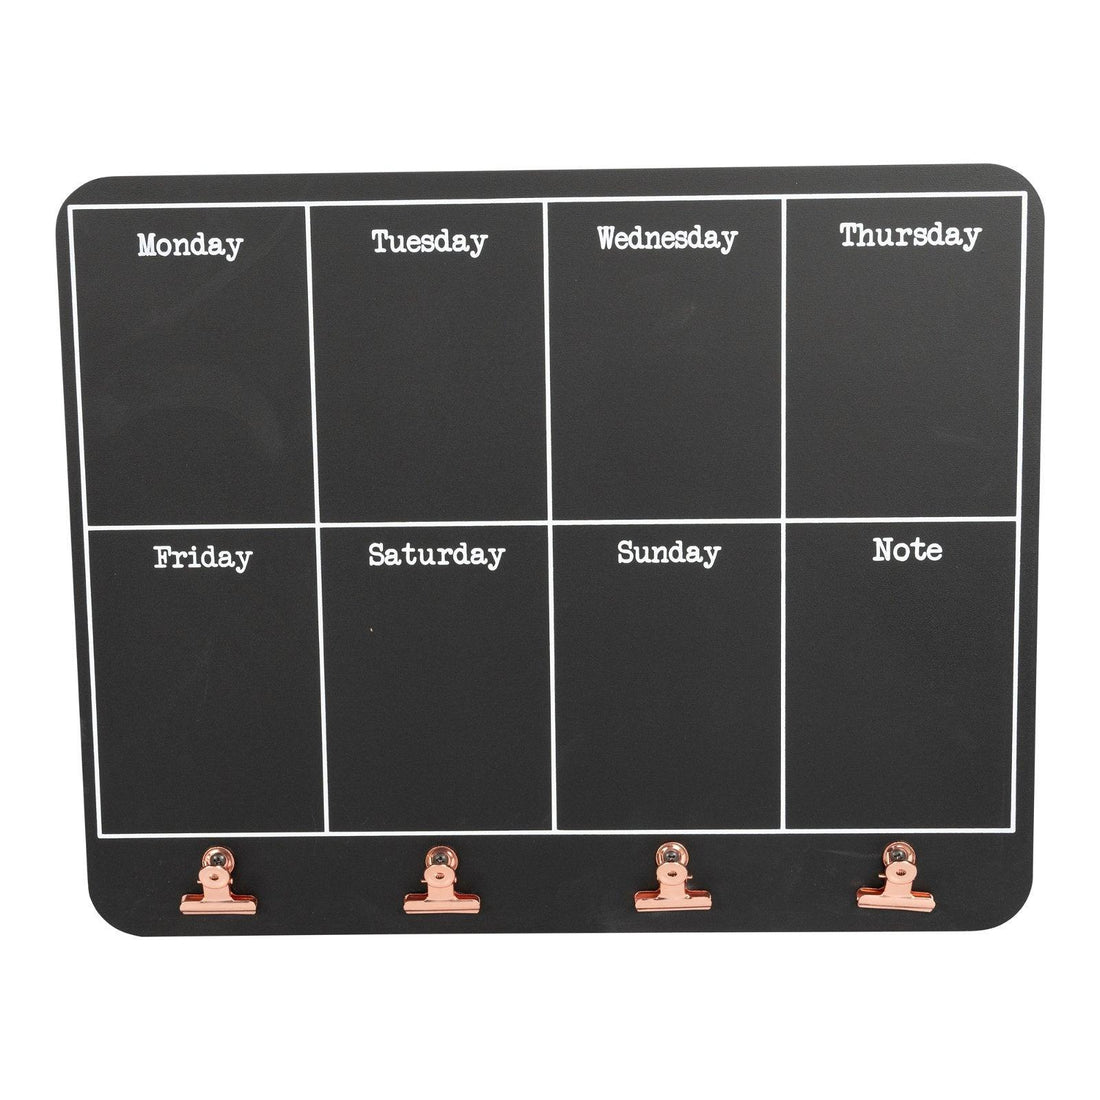 Black Weekly Memo Board With Copper Clips - £25.99 - Blackboards, Memo Boards & Calendars 